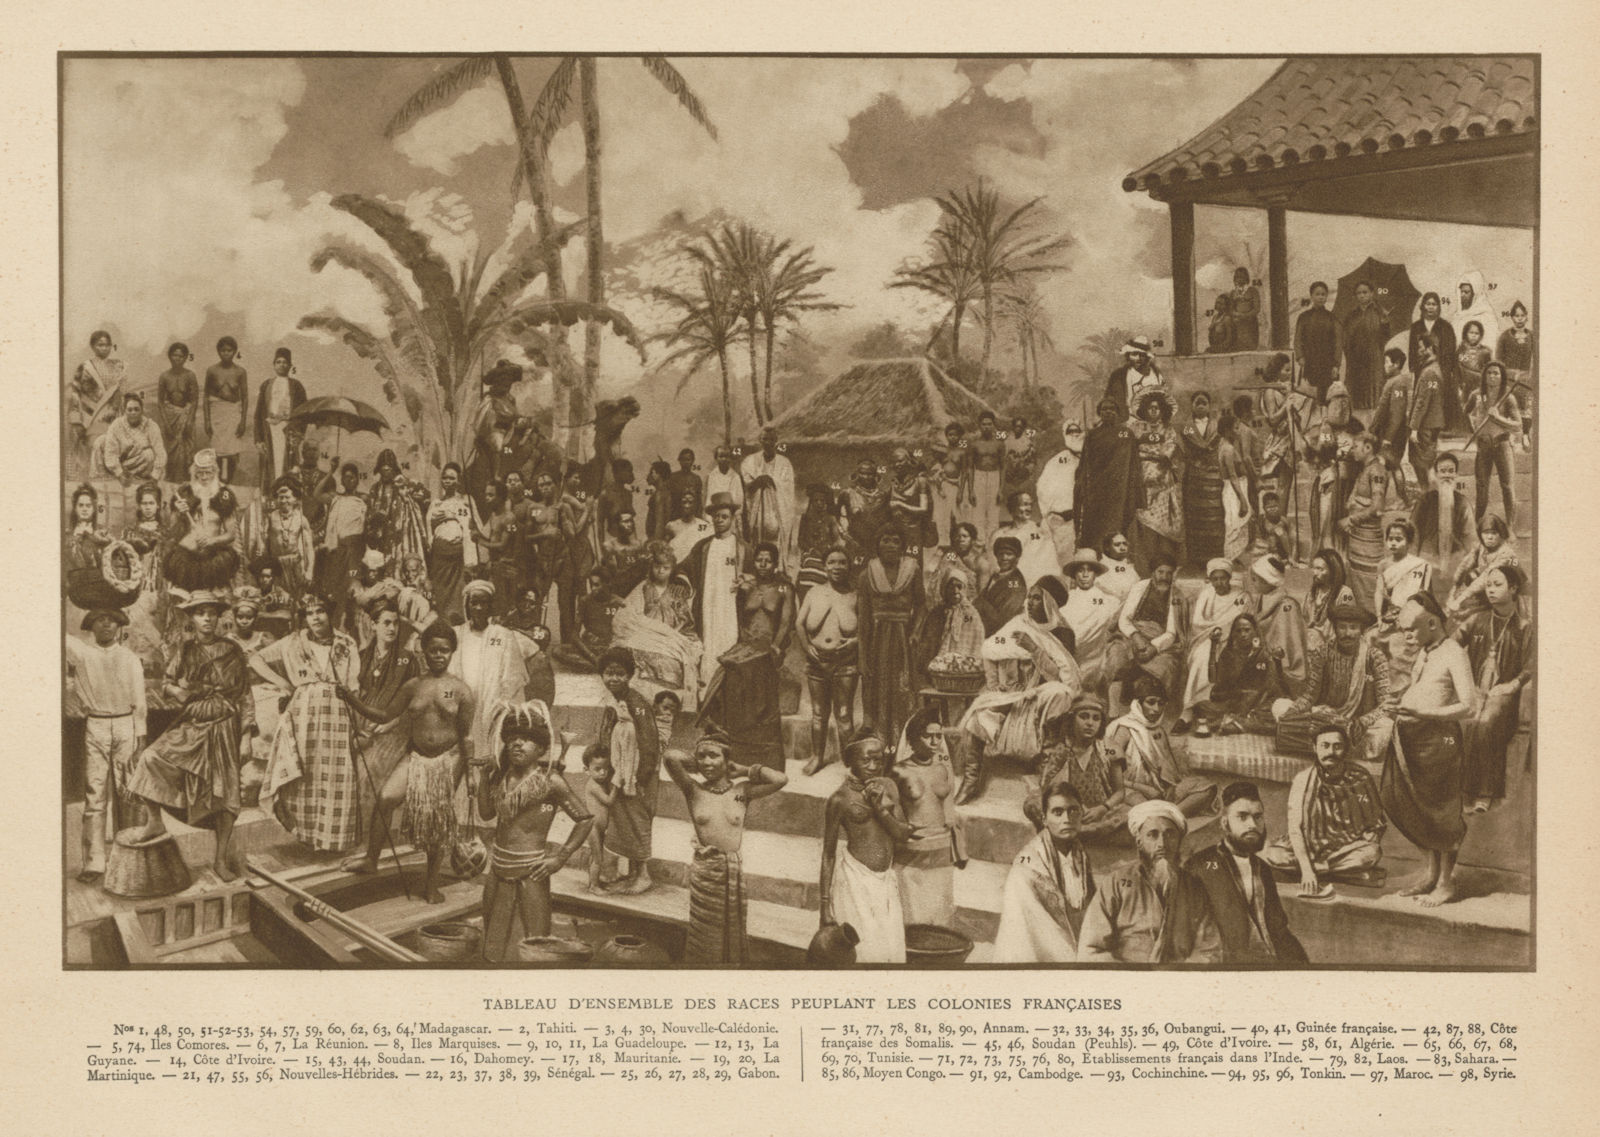 Tableau des races des colonies Francaises. People of the French colonies 1929